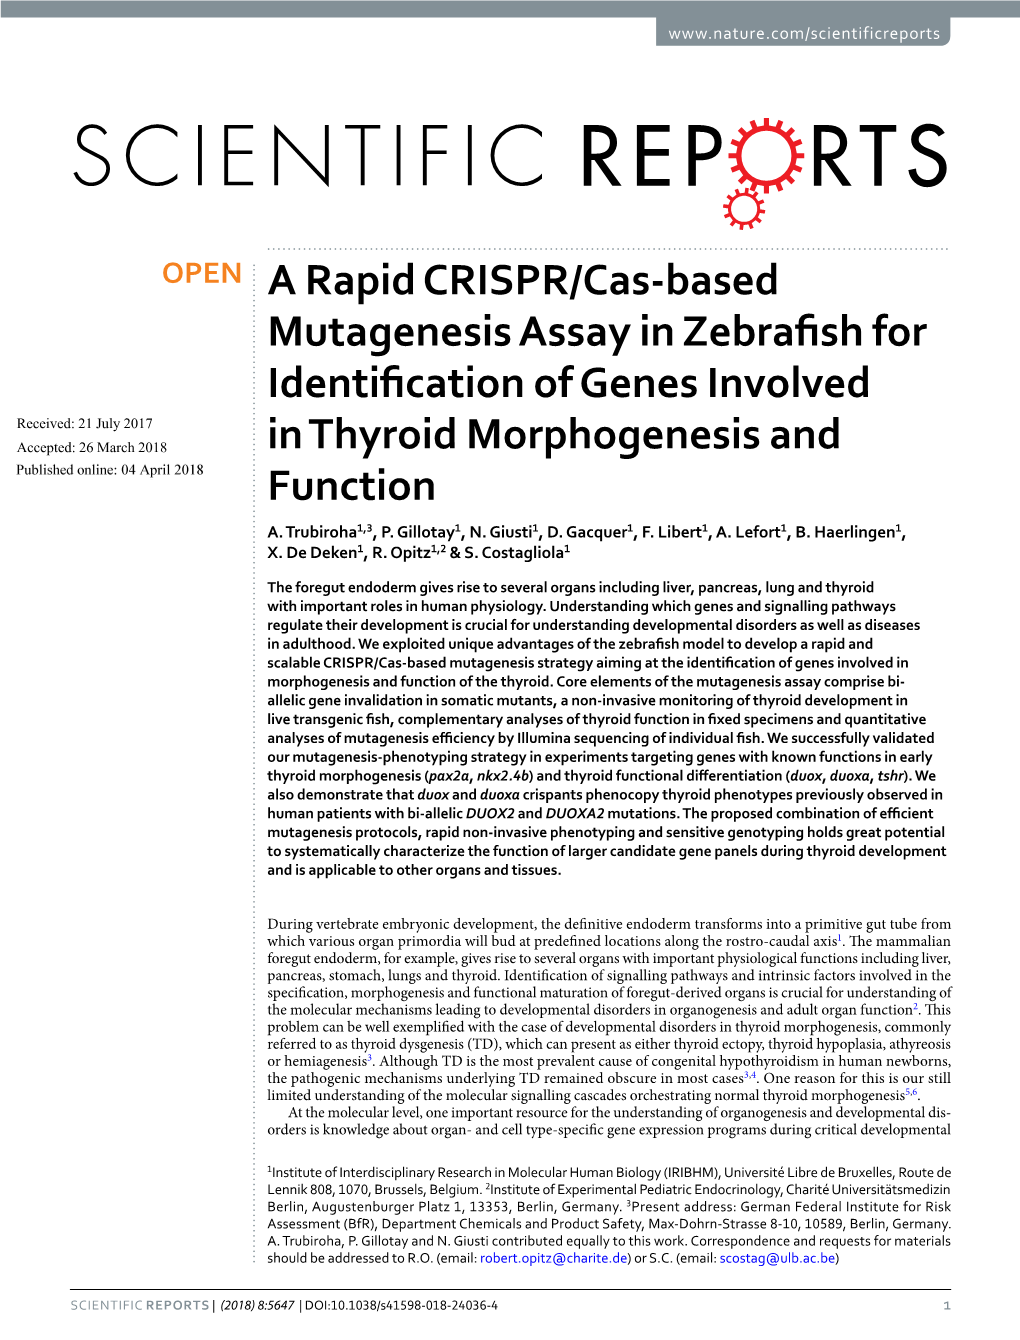 A Rapid CRISPR/Cas-Based Mutagenesis Assay in Zebrafish For